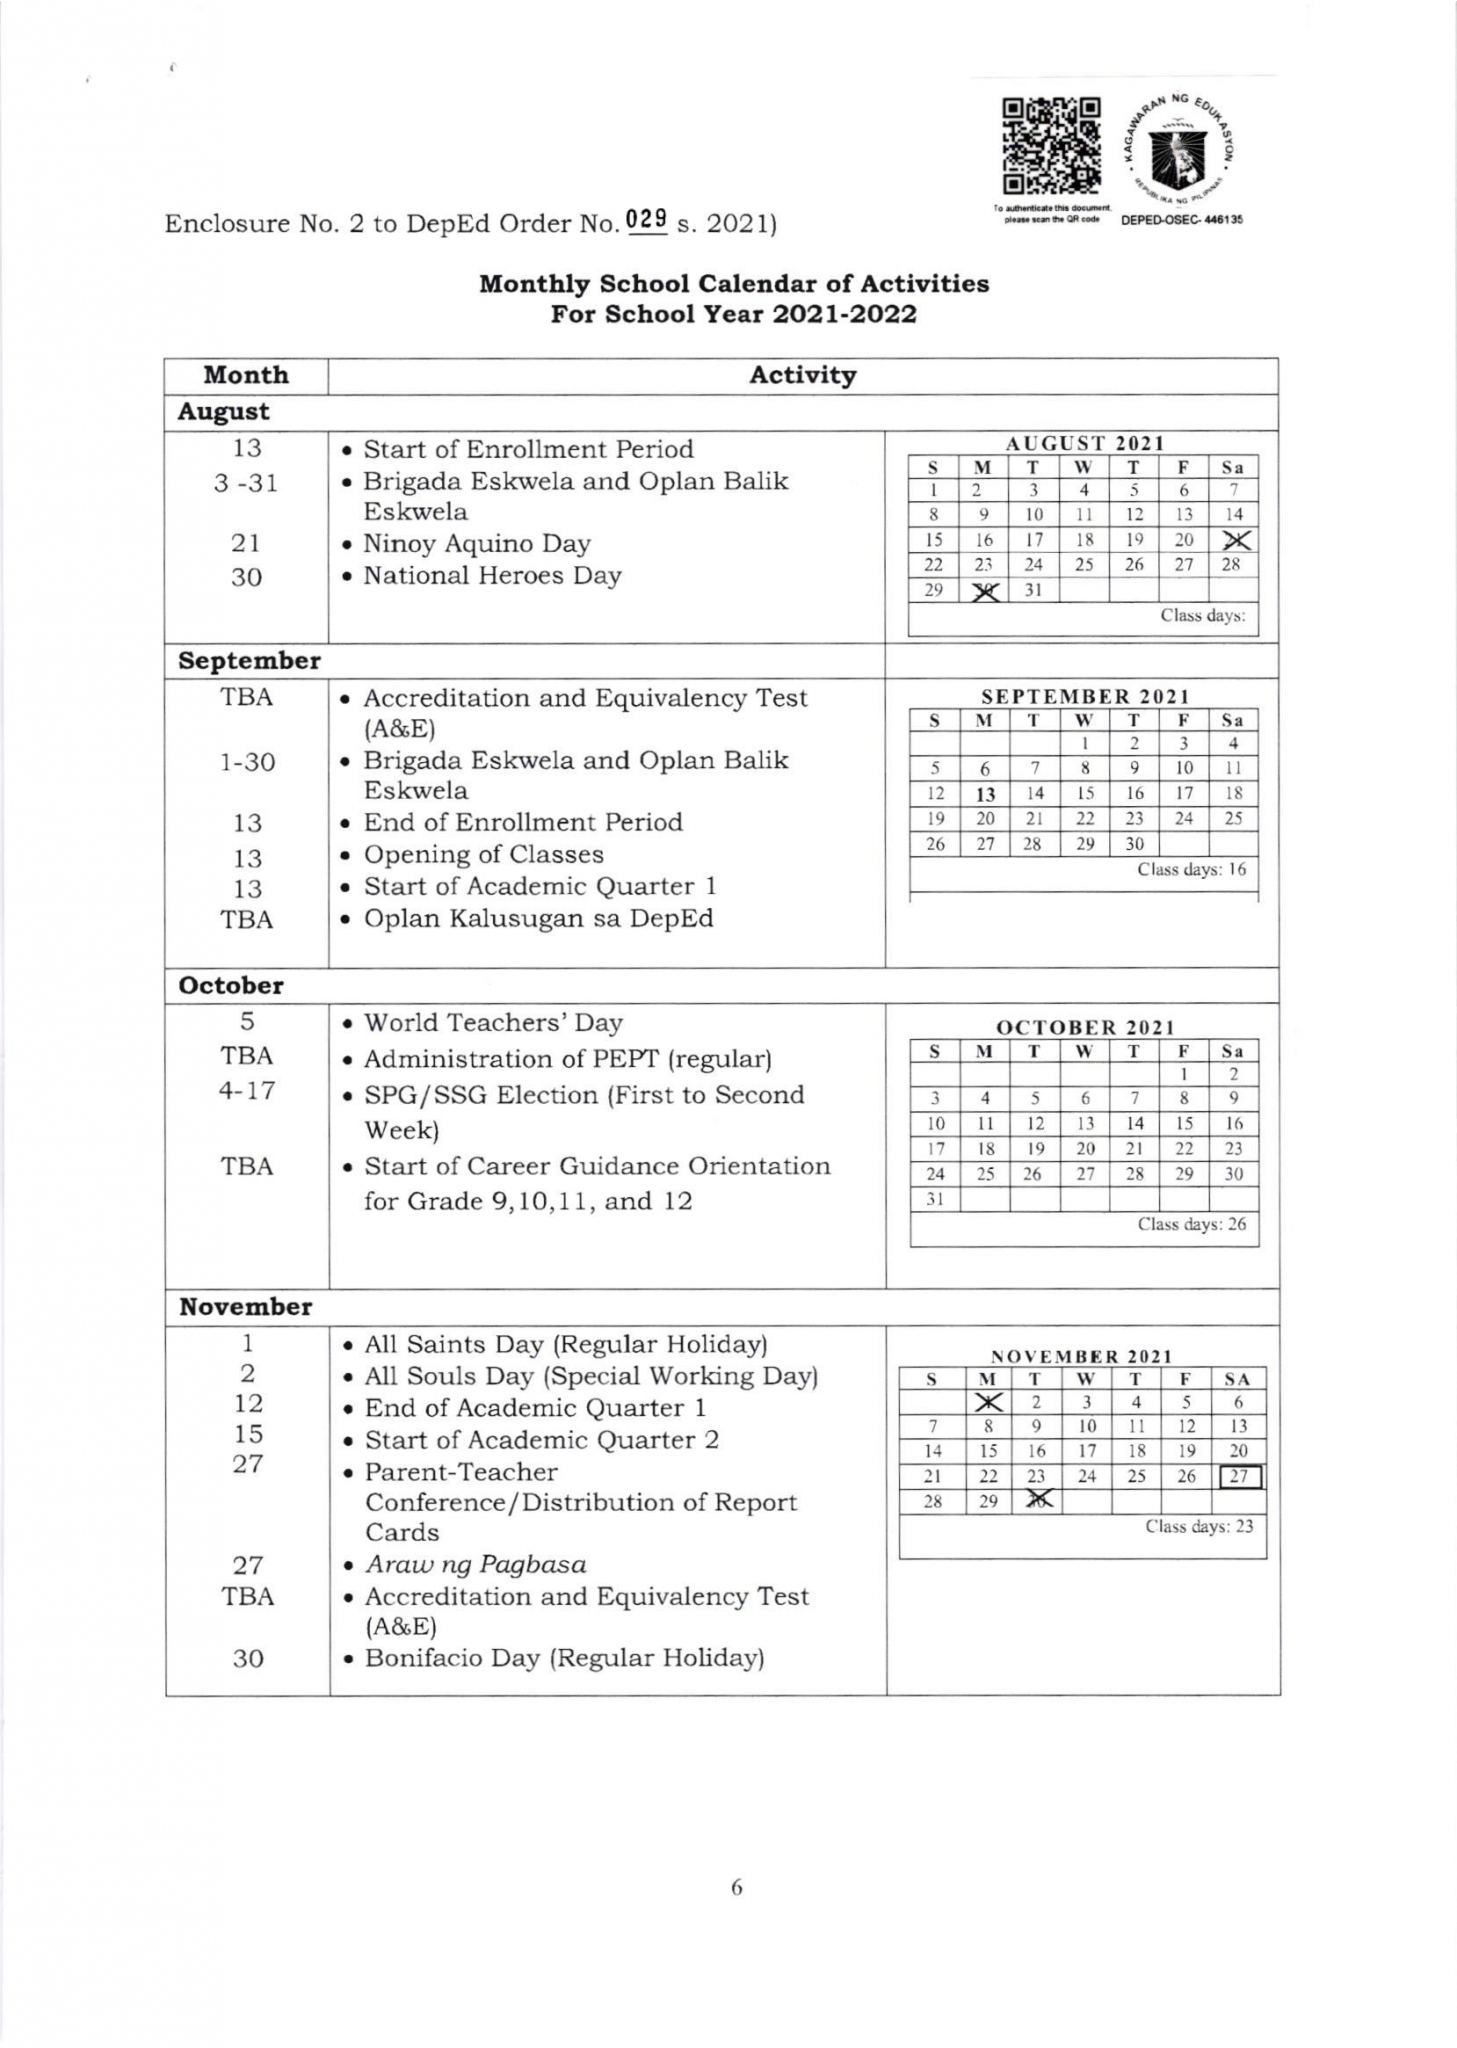 DepEd School Calendar 2021